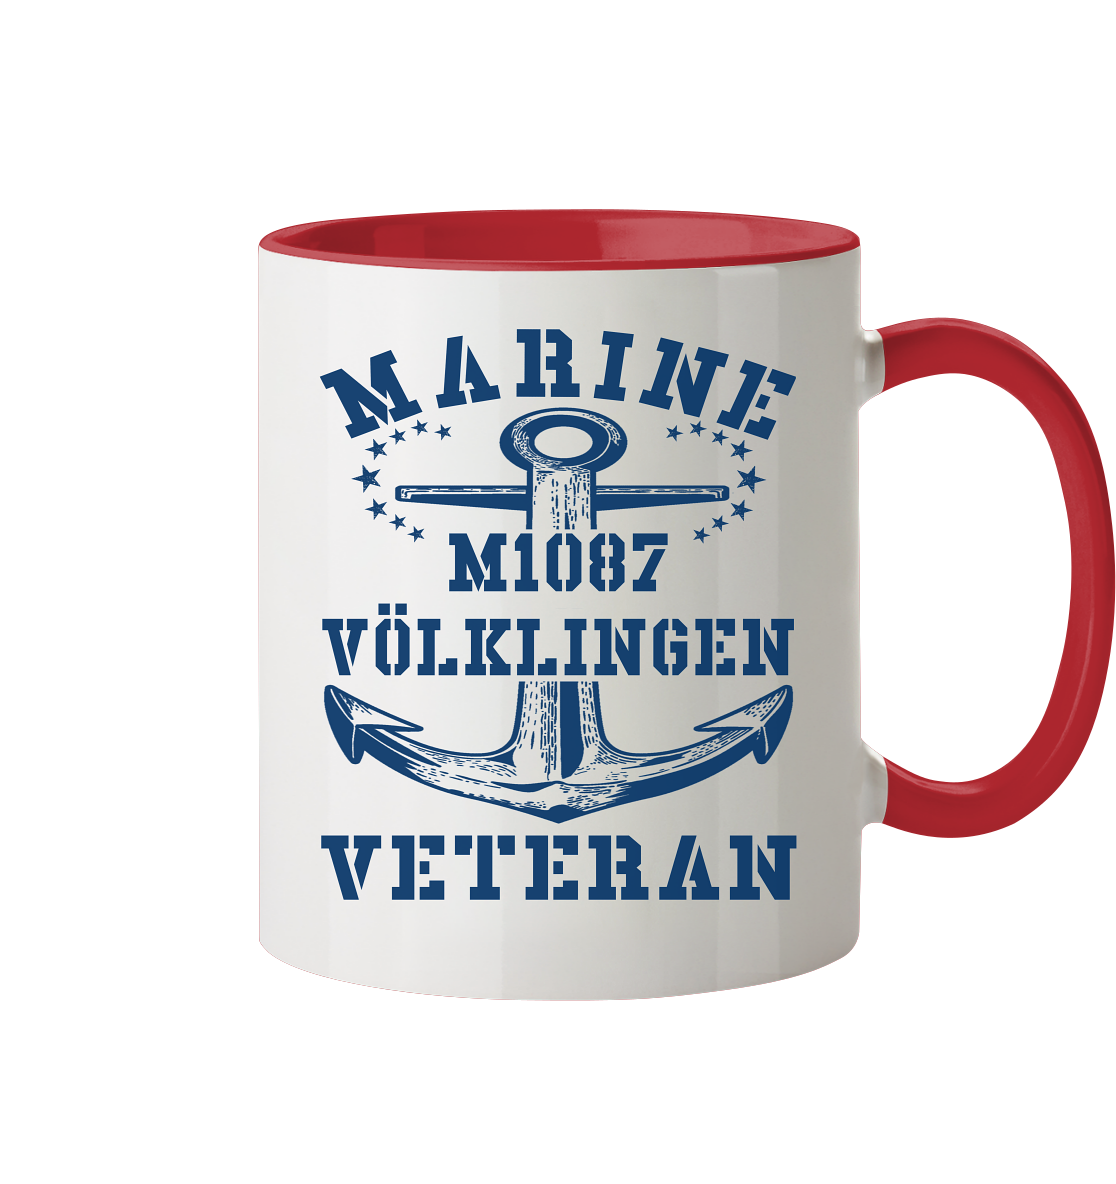 Marine Veteran M1087 VÖLKLINGEN - Tasse zweifarbig